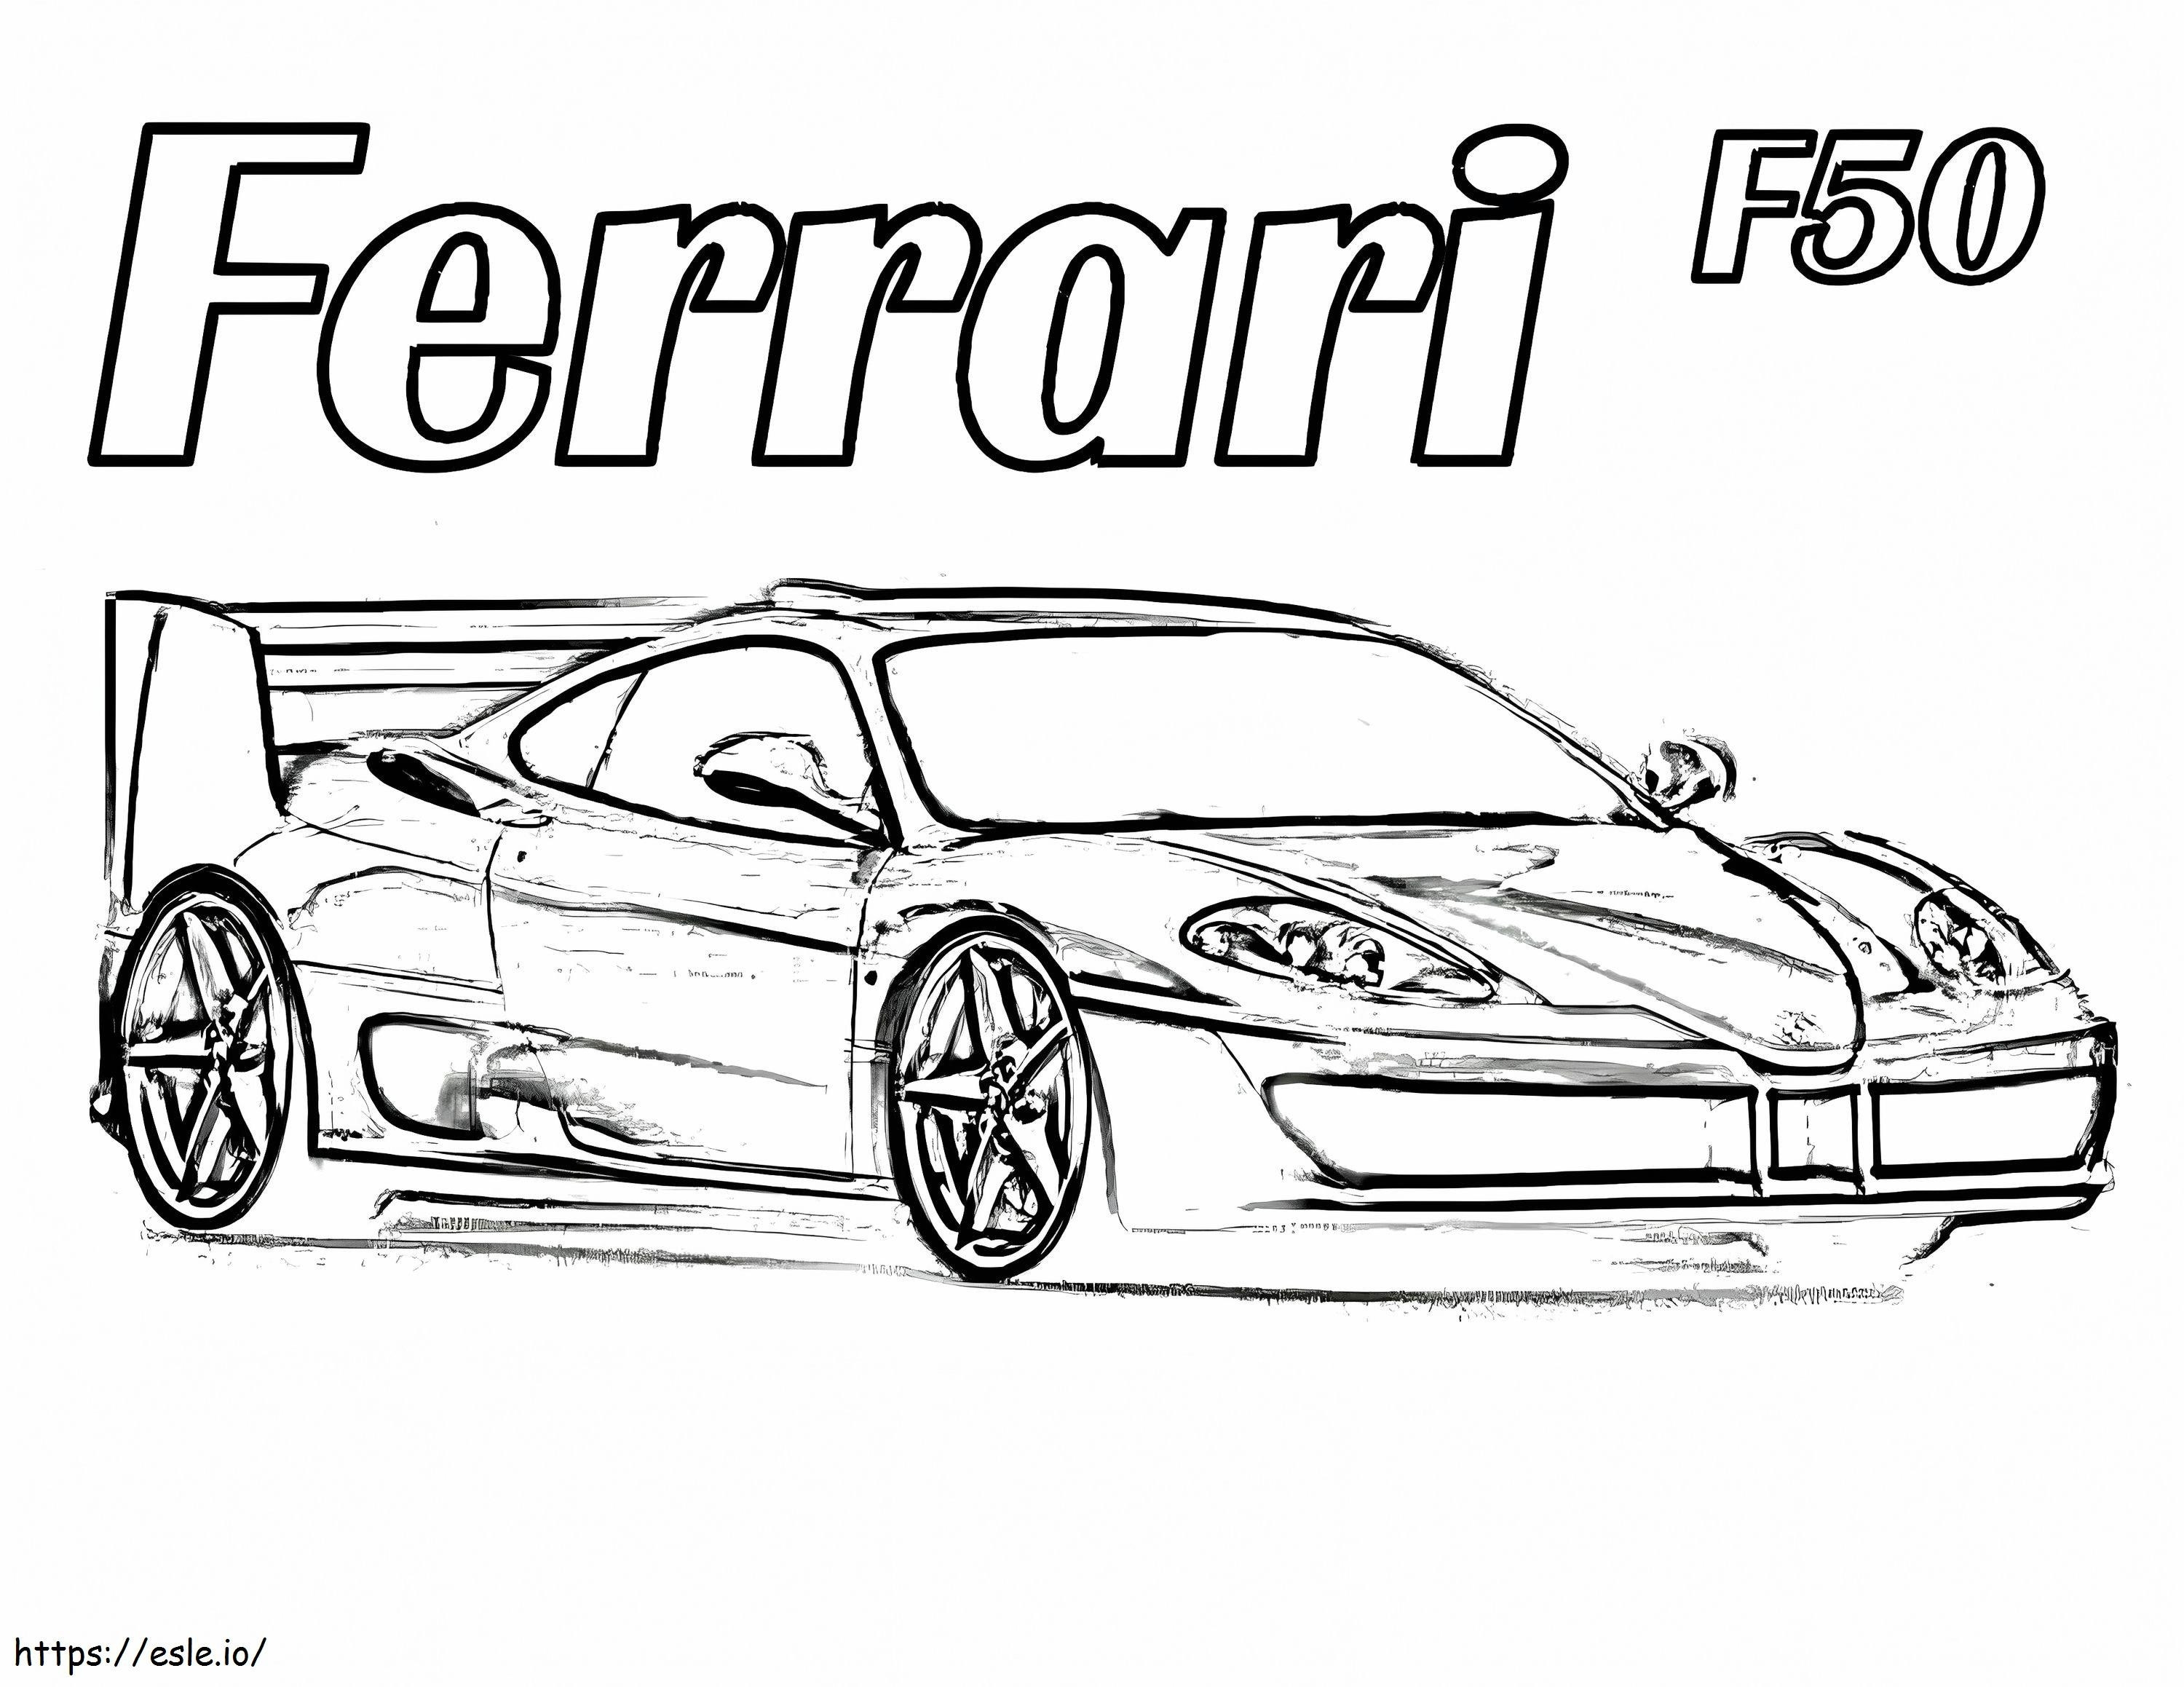 Ferrari F50 ausmalbilder